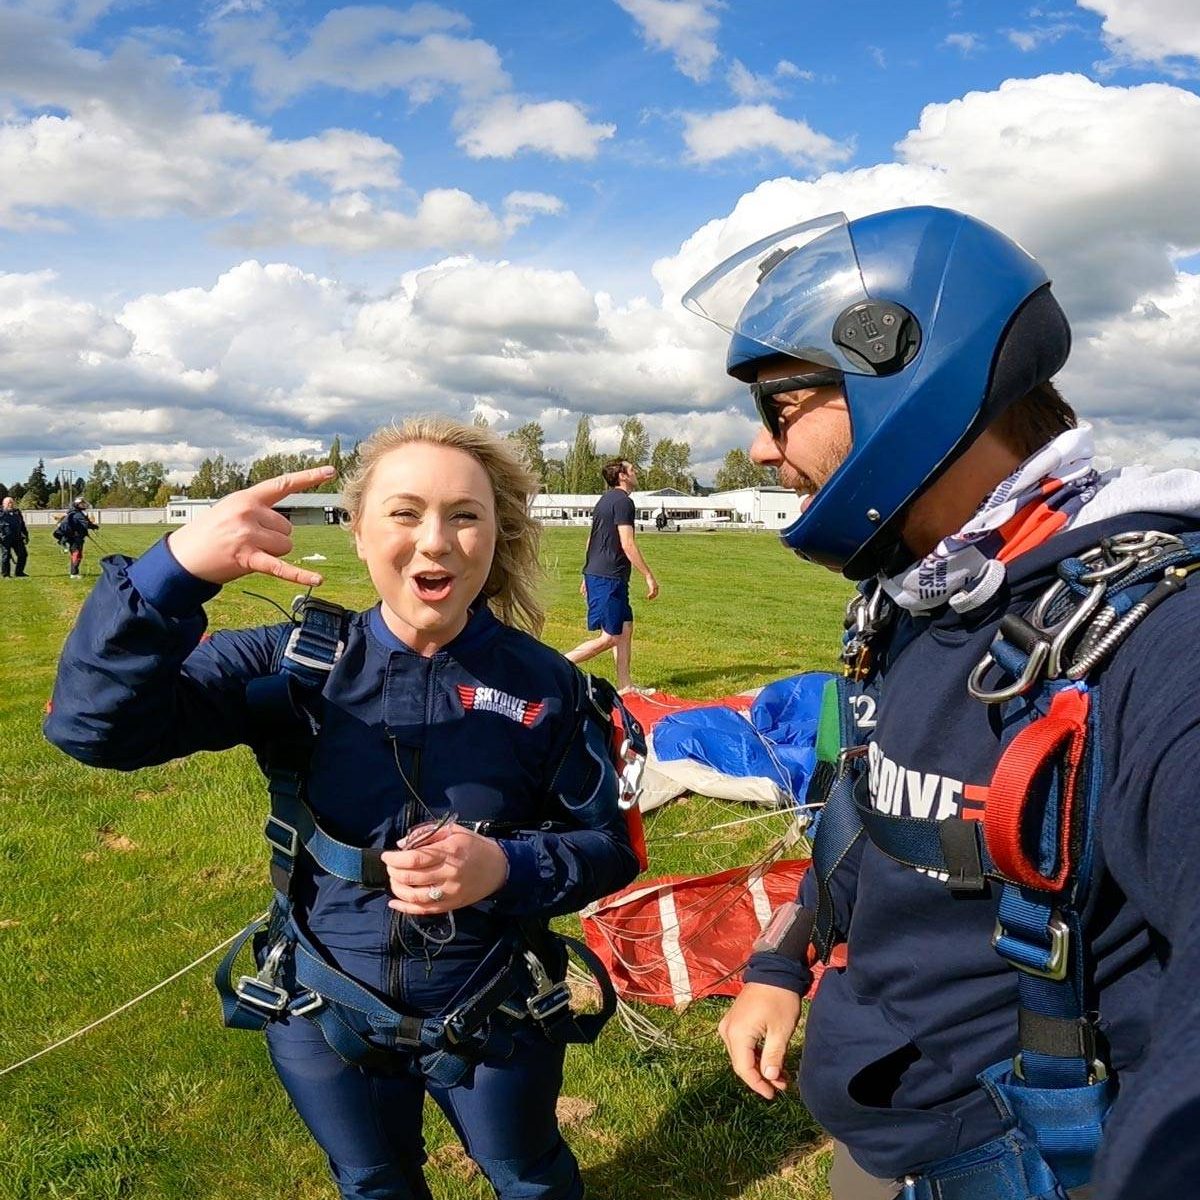 Skydivers celebrating a great jump at Skydive Snohomish